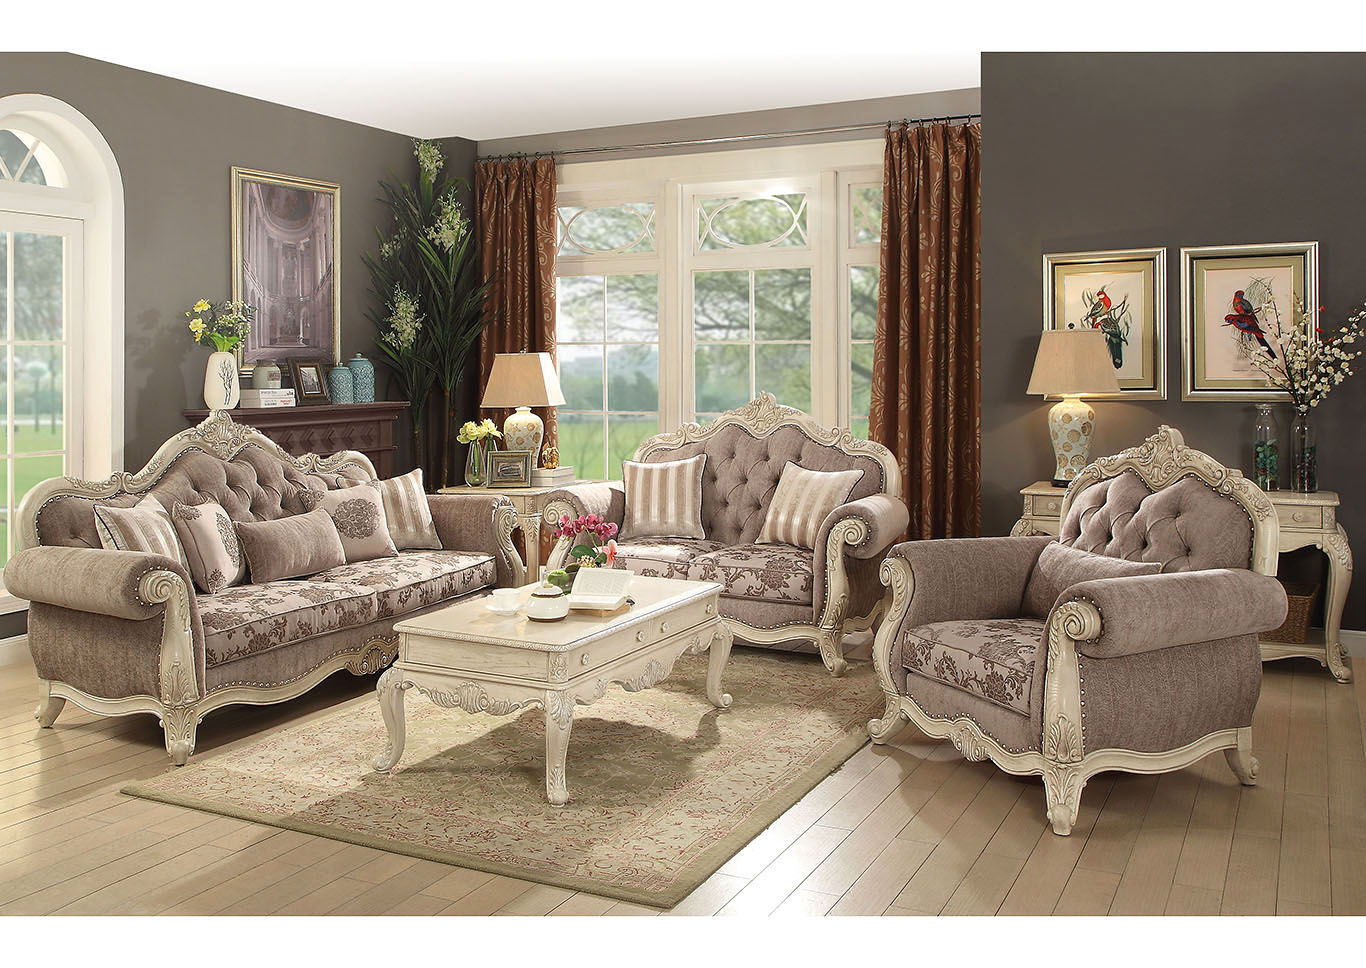 Ragenardus Antique White/Gray Upholstered Sofa and Loveseat